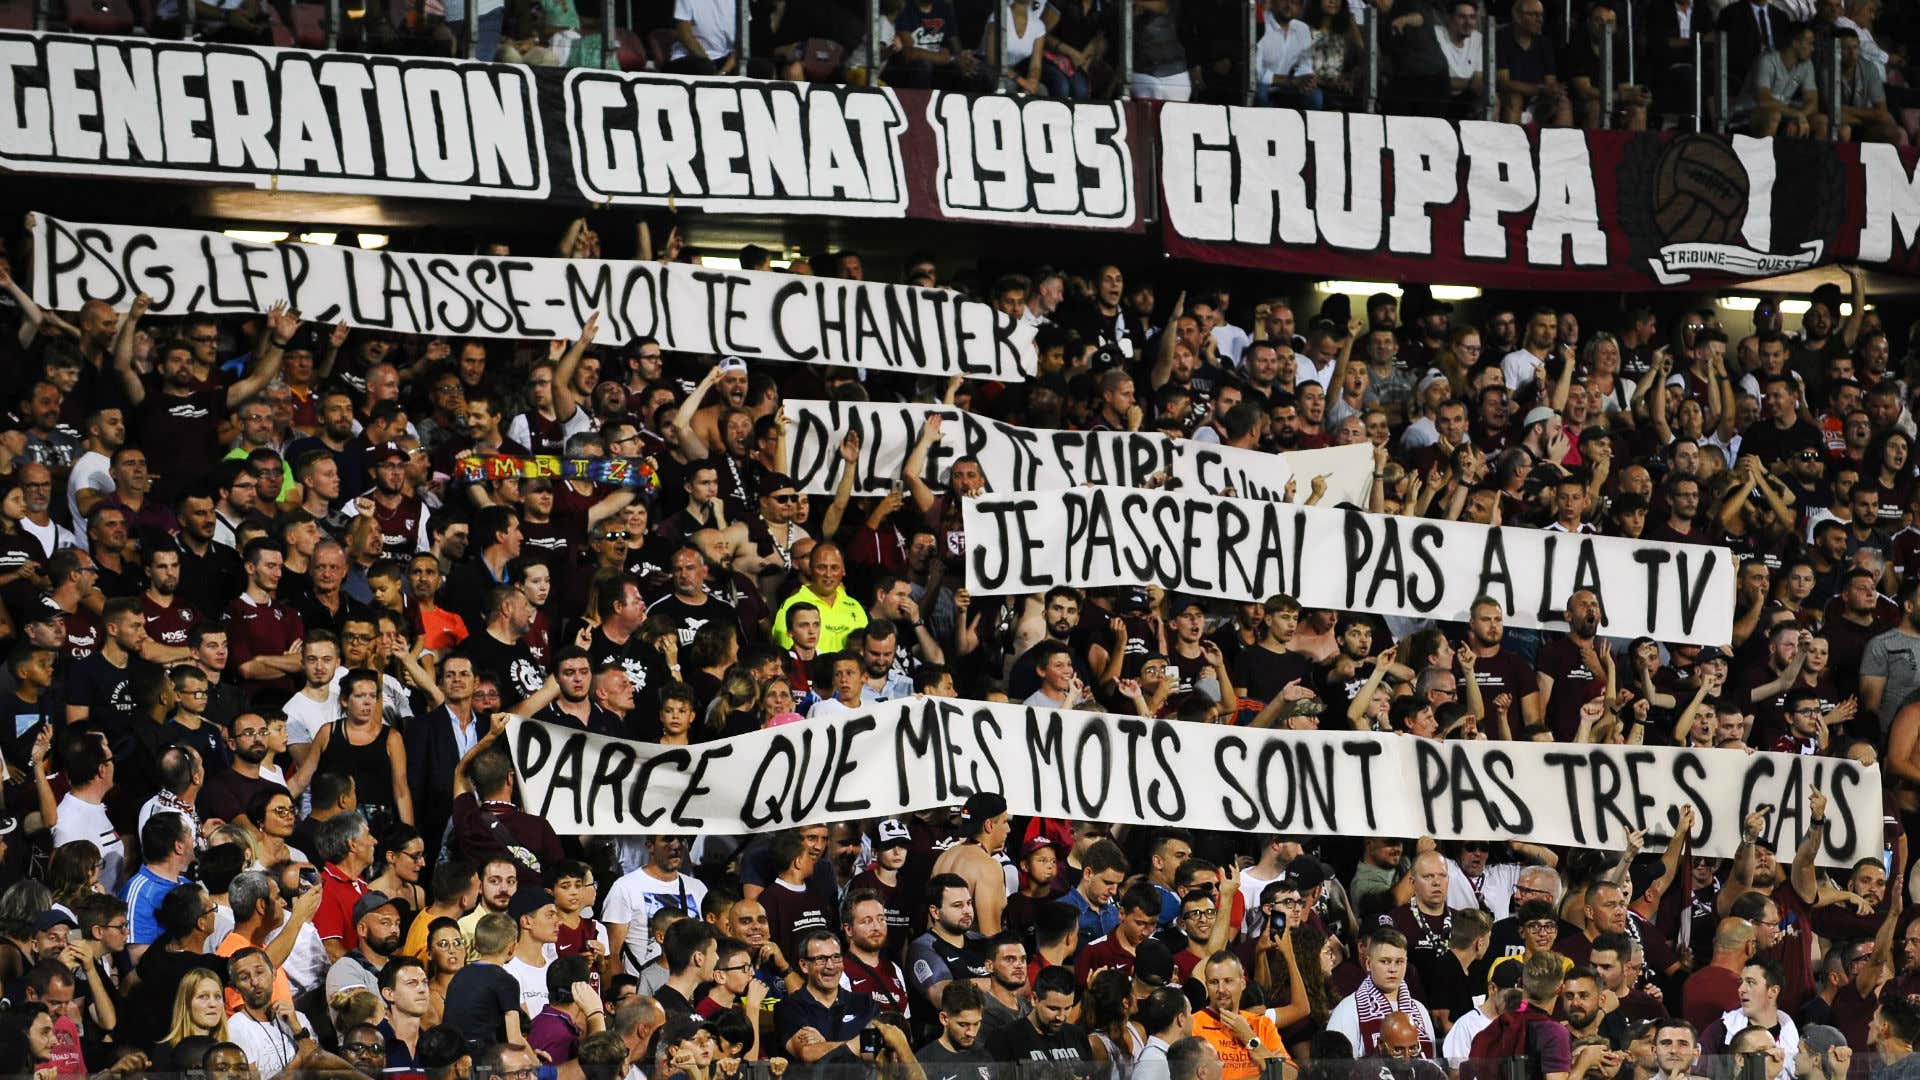 PSG Metz banners